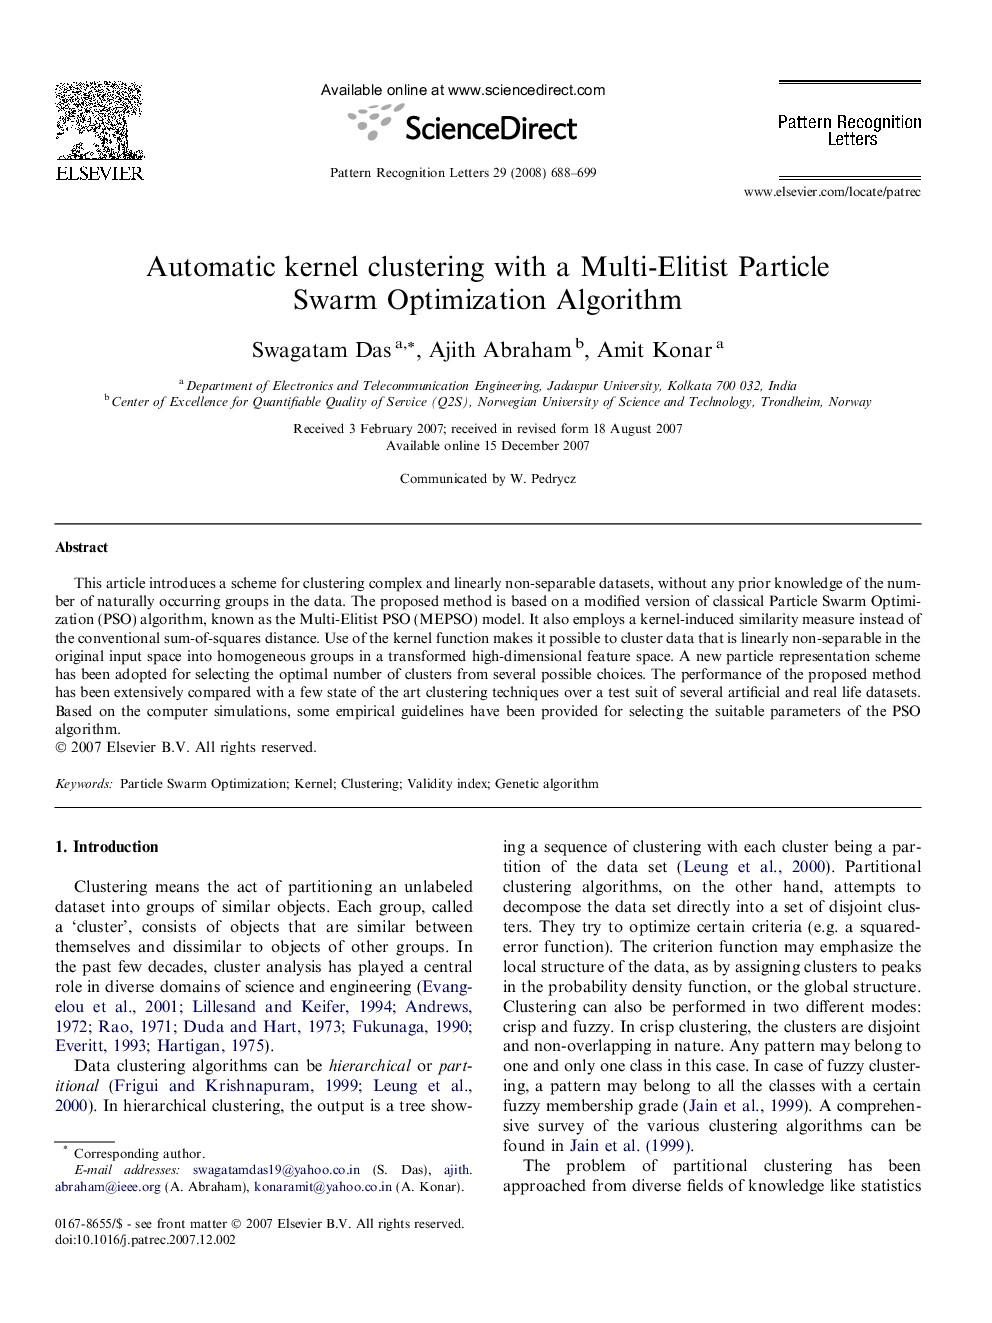 Automatic kernel clustering with a Multi-Elitist Particle Swarm Optimization Algorithm